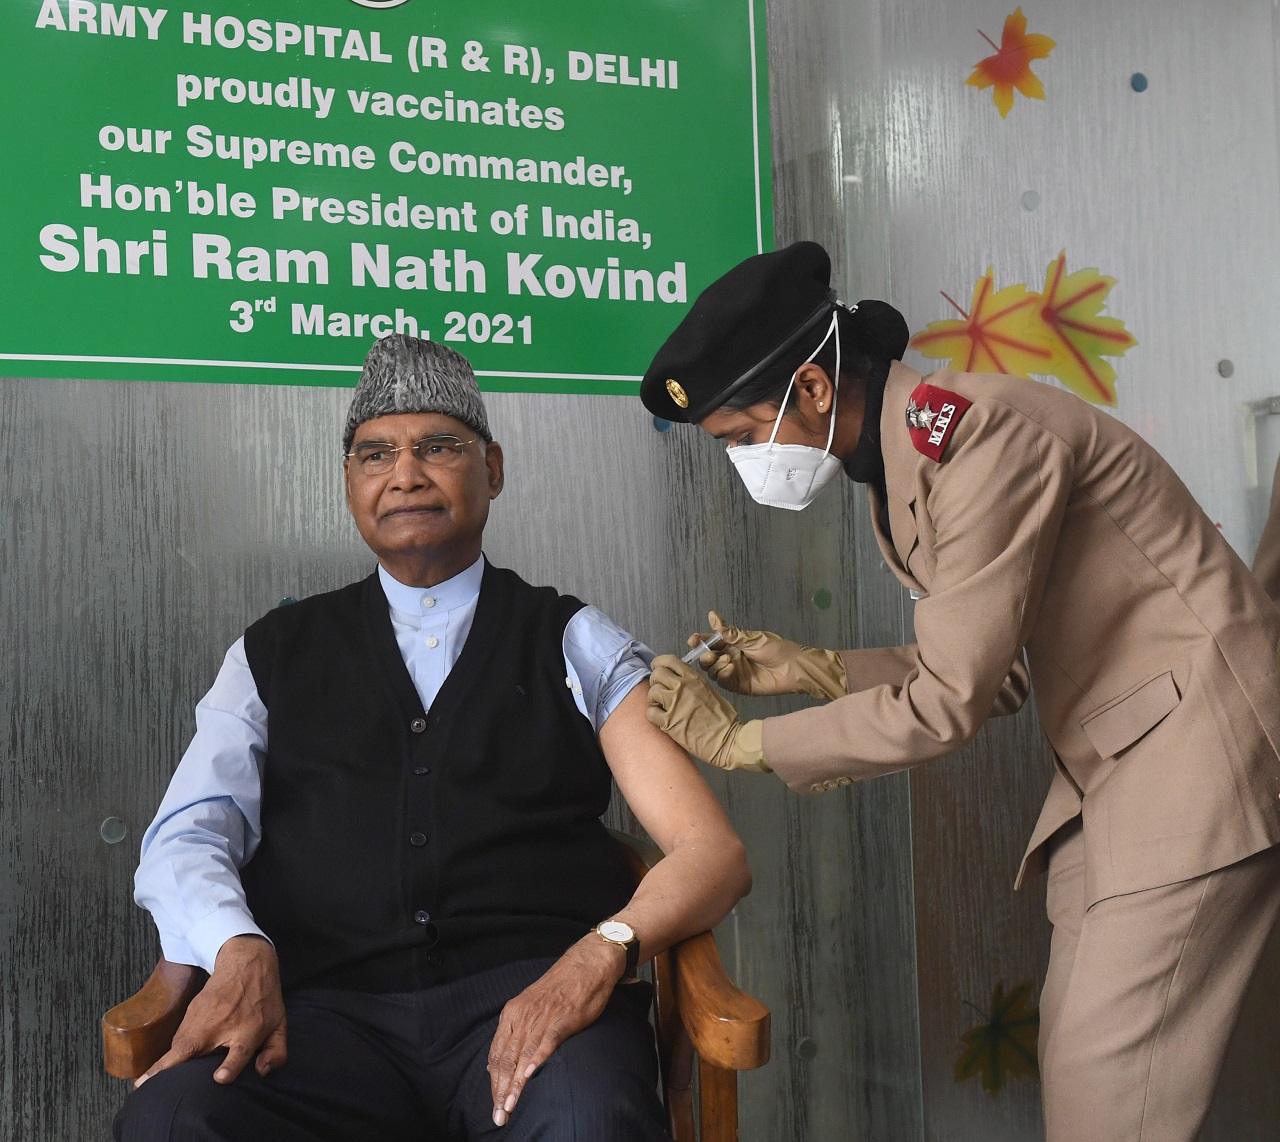 राष्ट्रपति रामनाथ कोविंद ने लगवाया कोरोना वैक्सीन का टीका